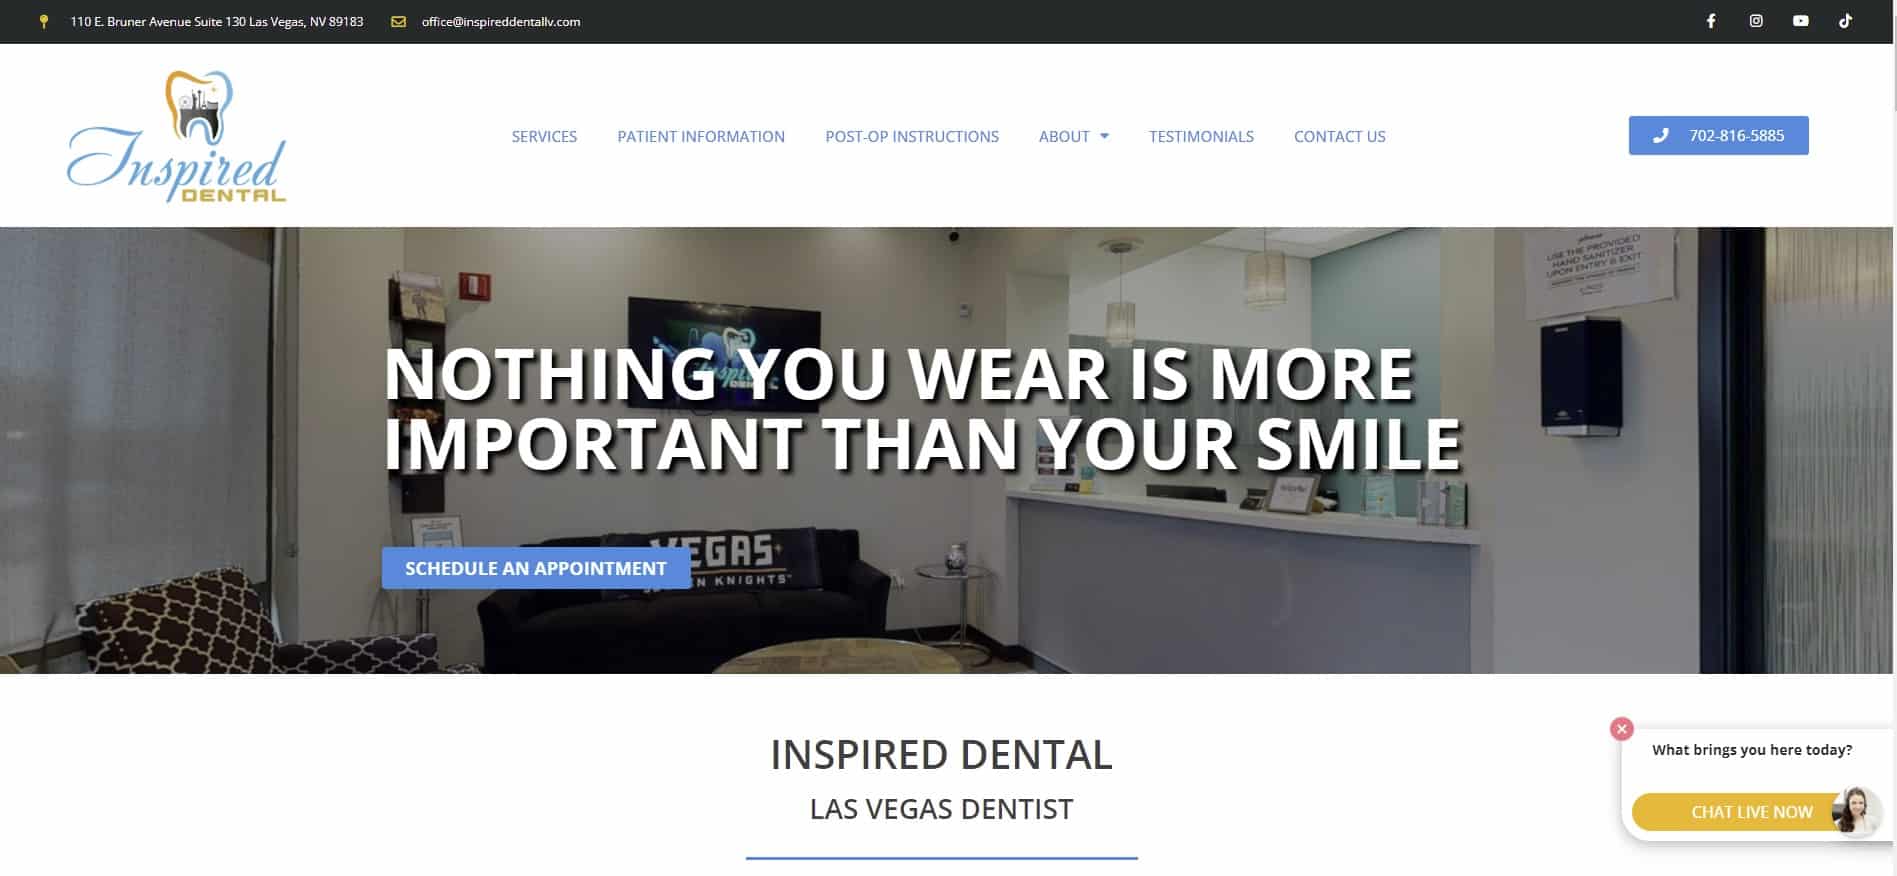 Las Vegas Dentist - Inspired Dental